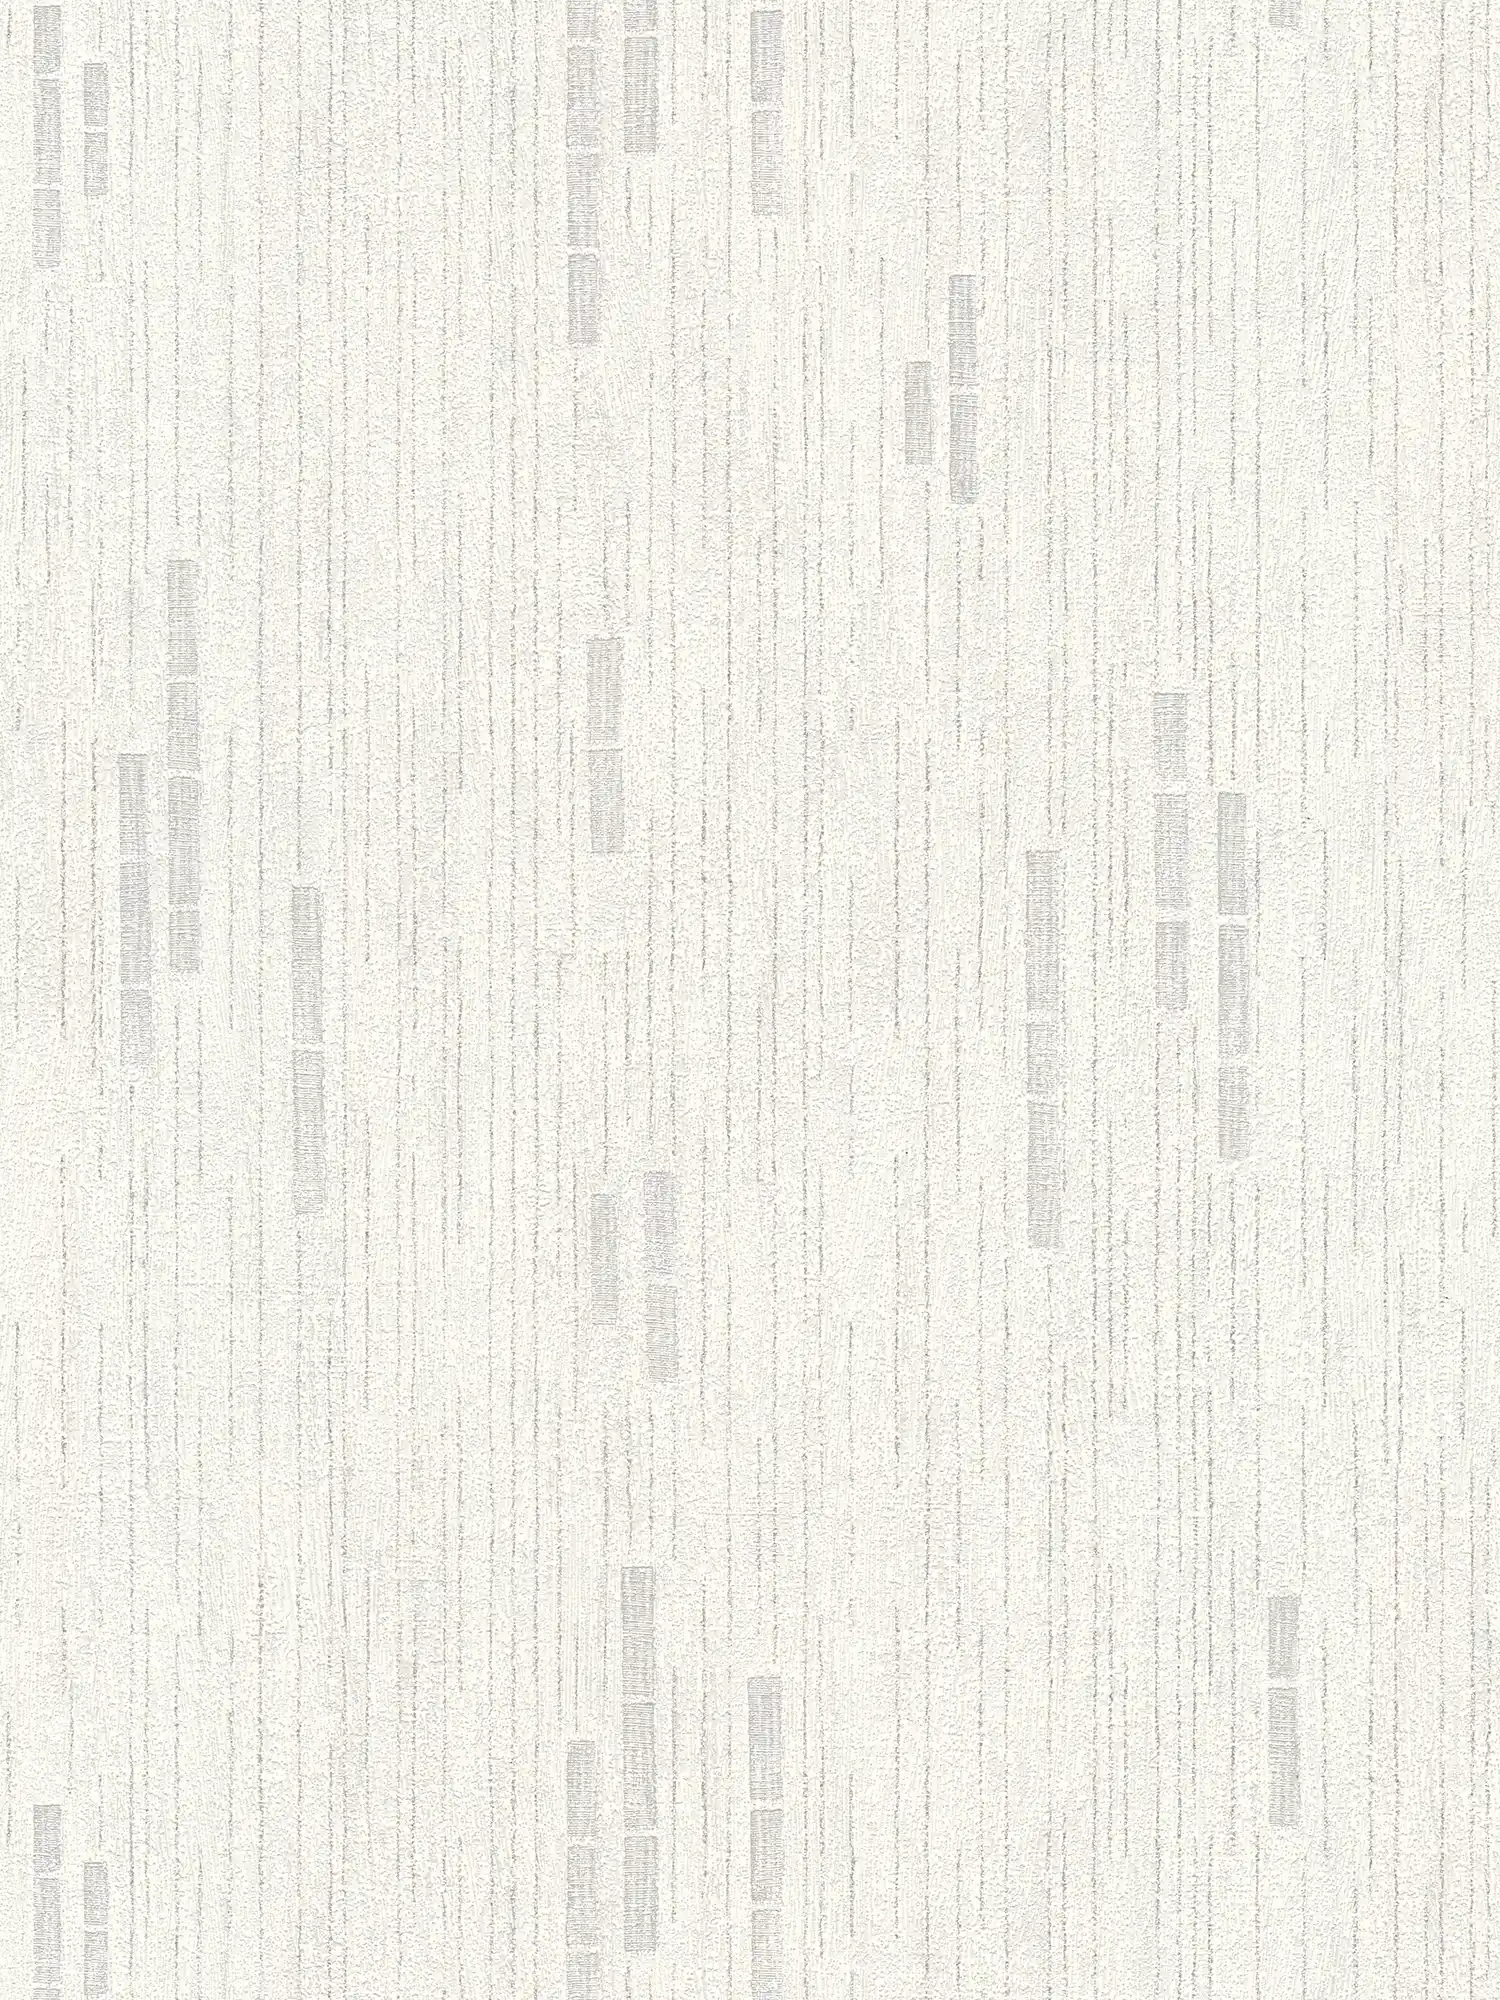 Retro wallpaper with structure non-woven and subtle design - grey, metallic, white
